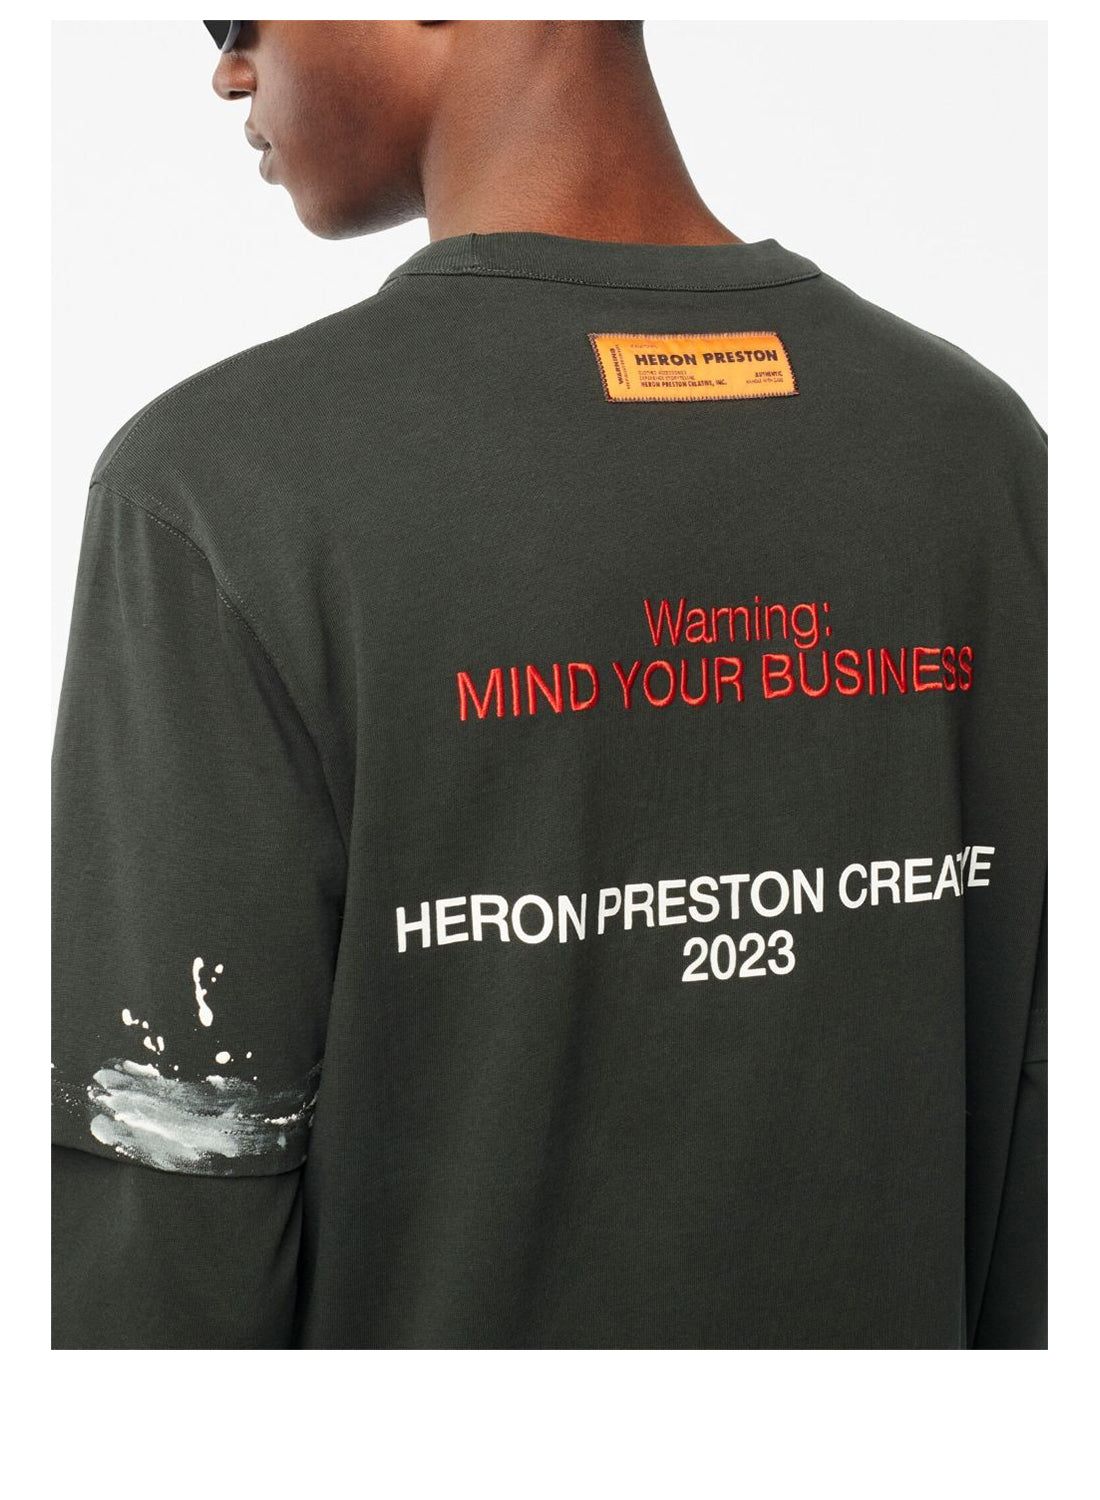 HERON PRESTON HPC SECURITY SS TEE